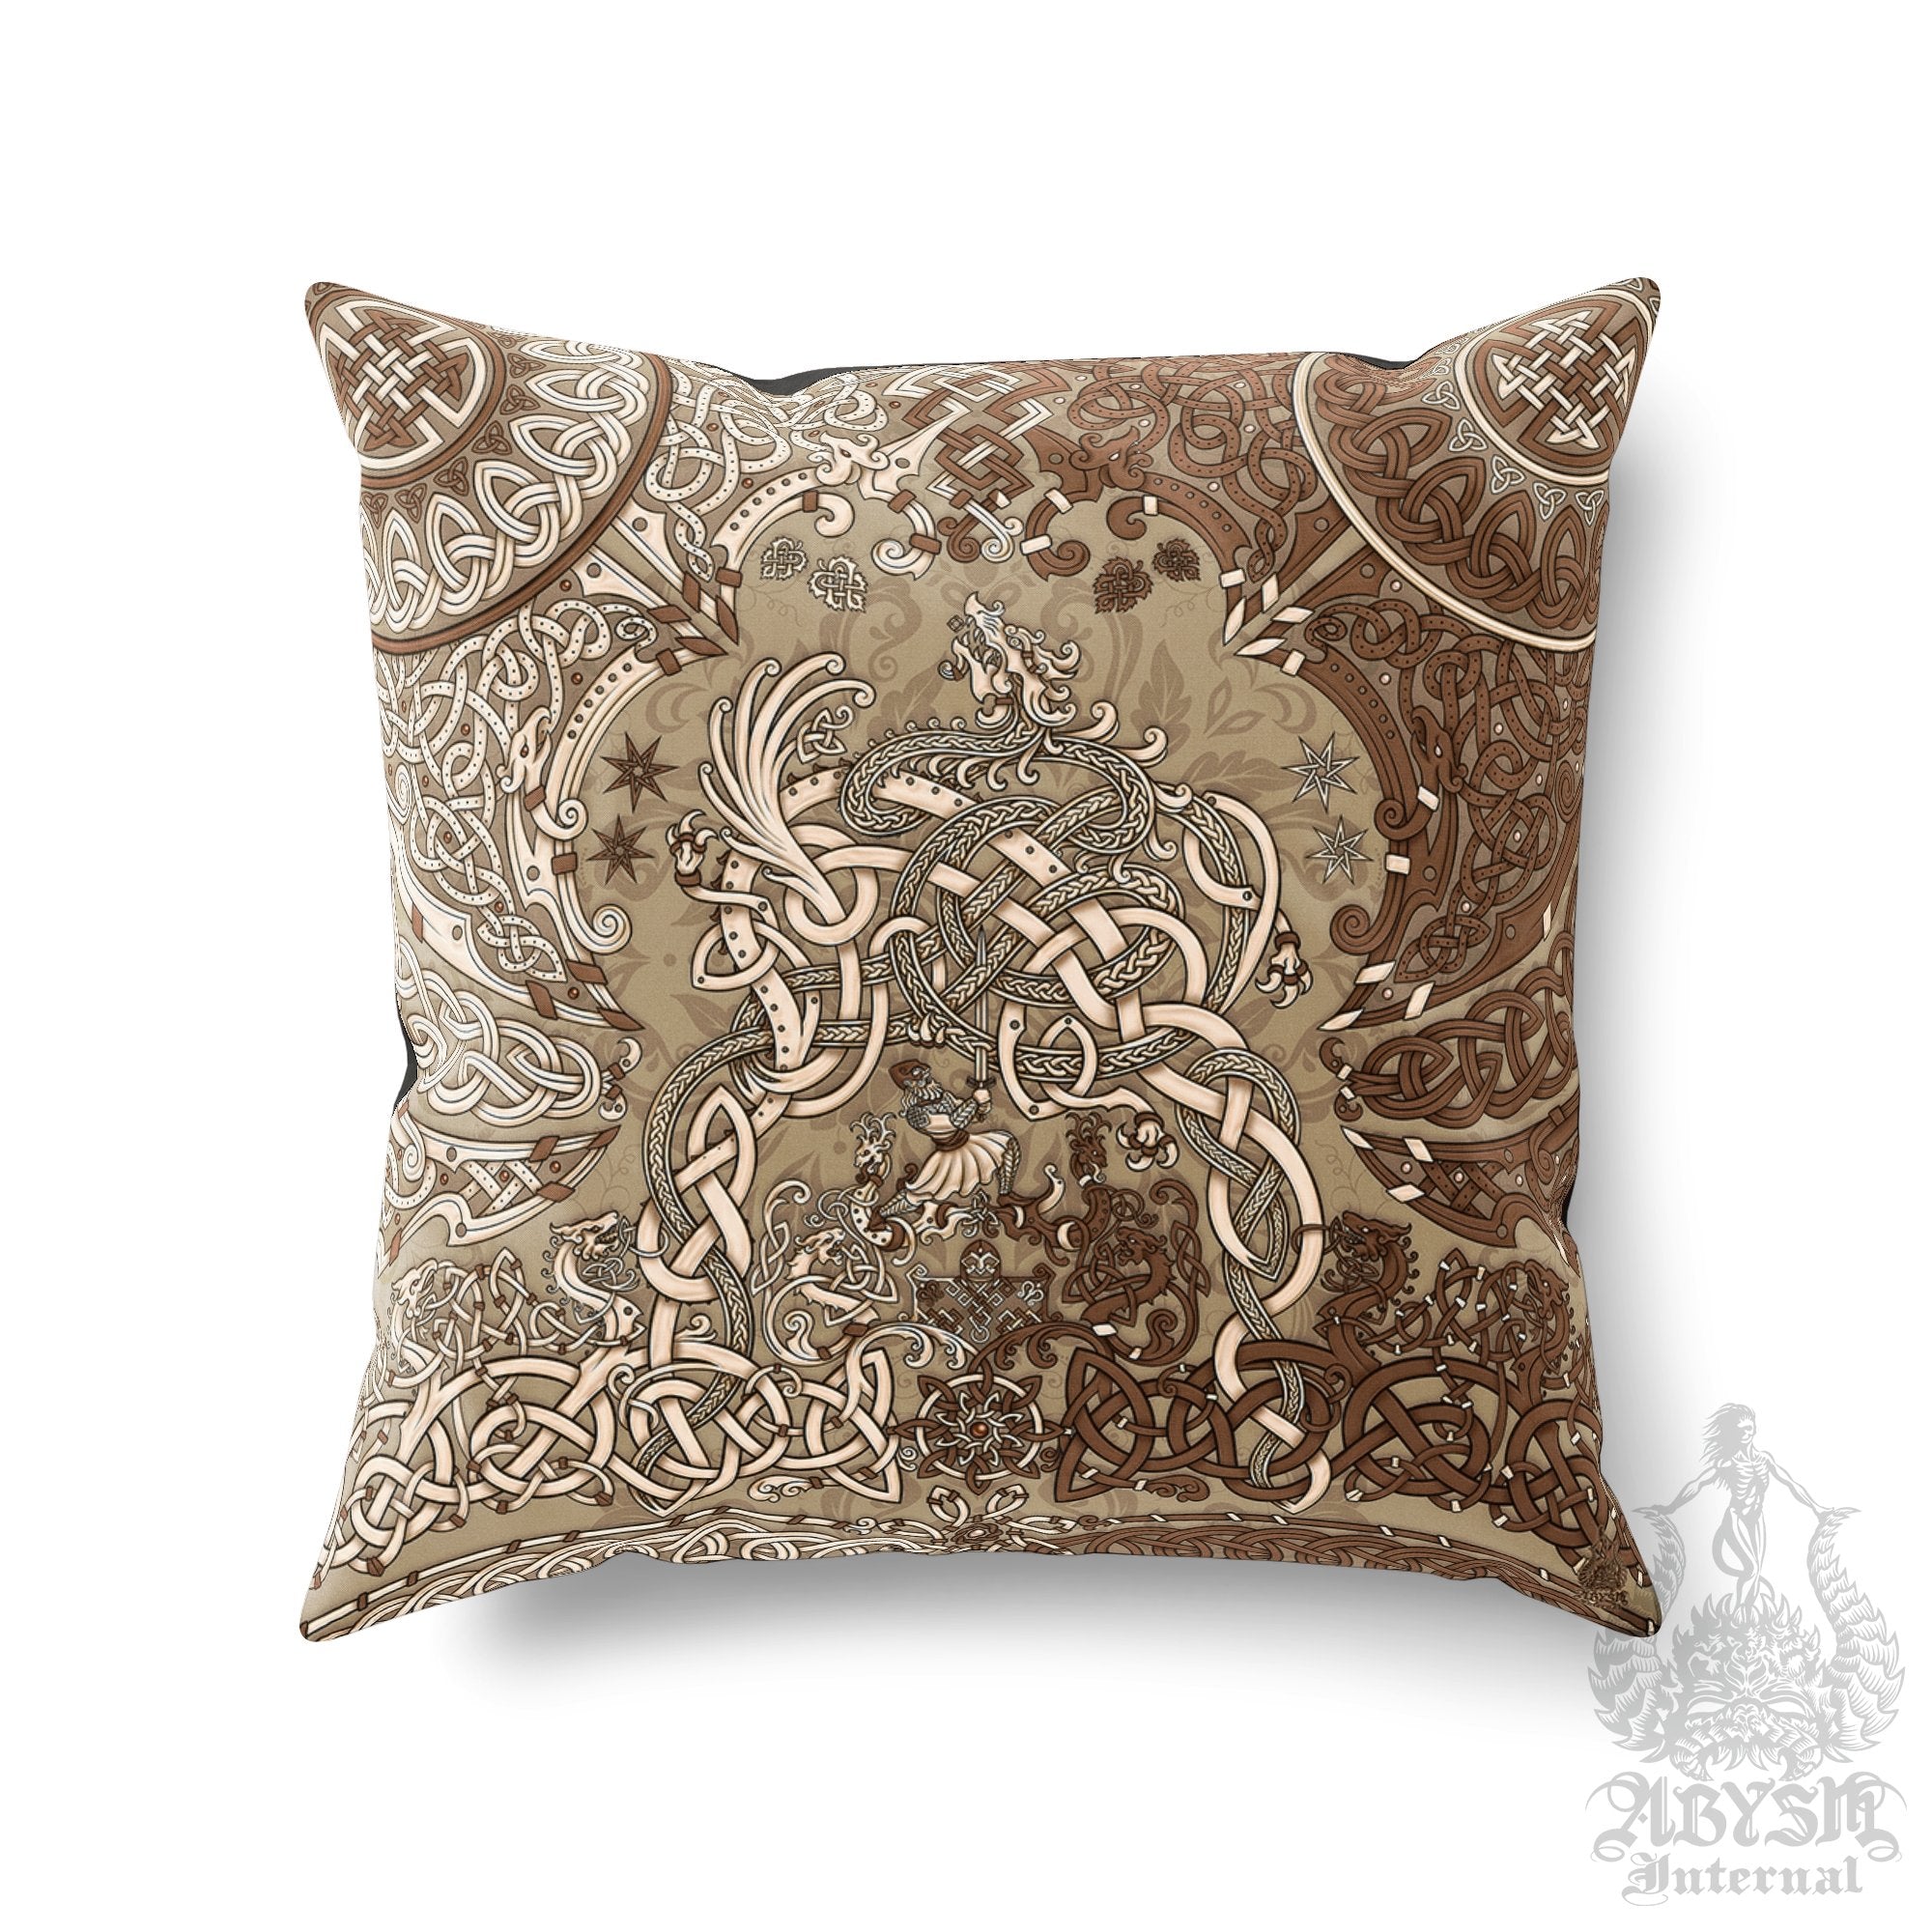 Viking Throw Pillow, Decorative Accent Cushion, Gamer Room Decor, Dragon Fafnir, Nordic Art, Alternative Home, Funky and Eclectic - Cream - Abysm Internal